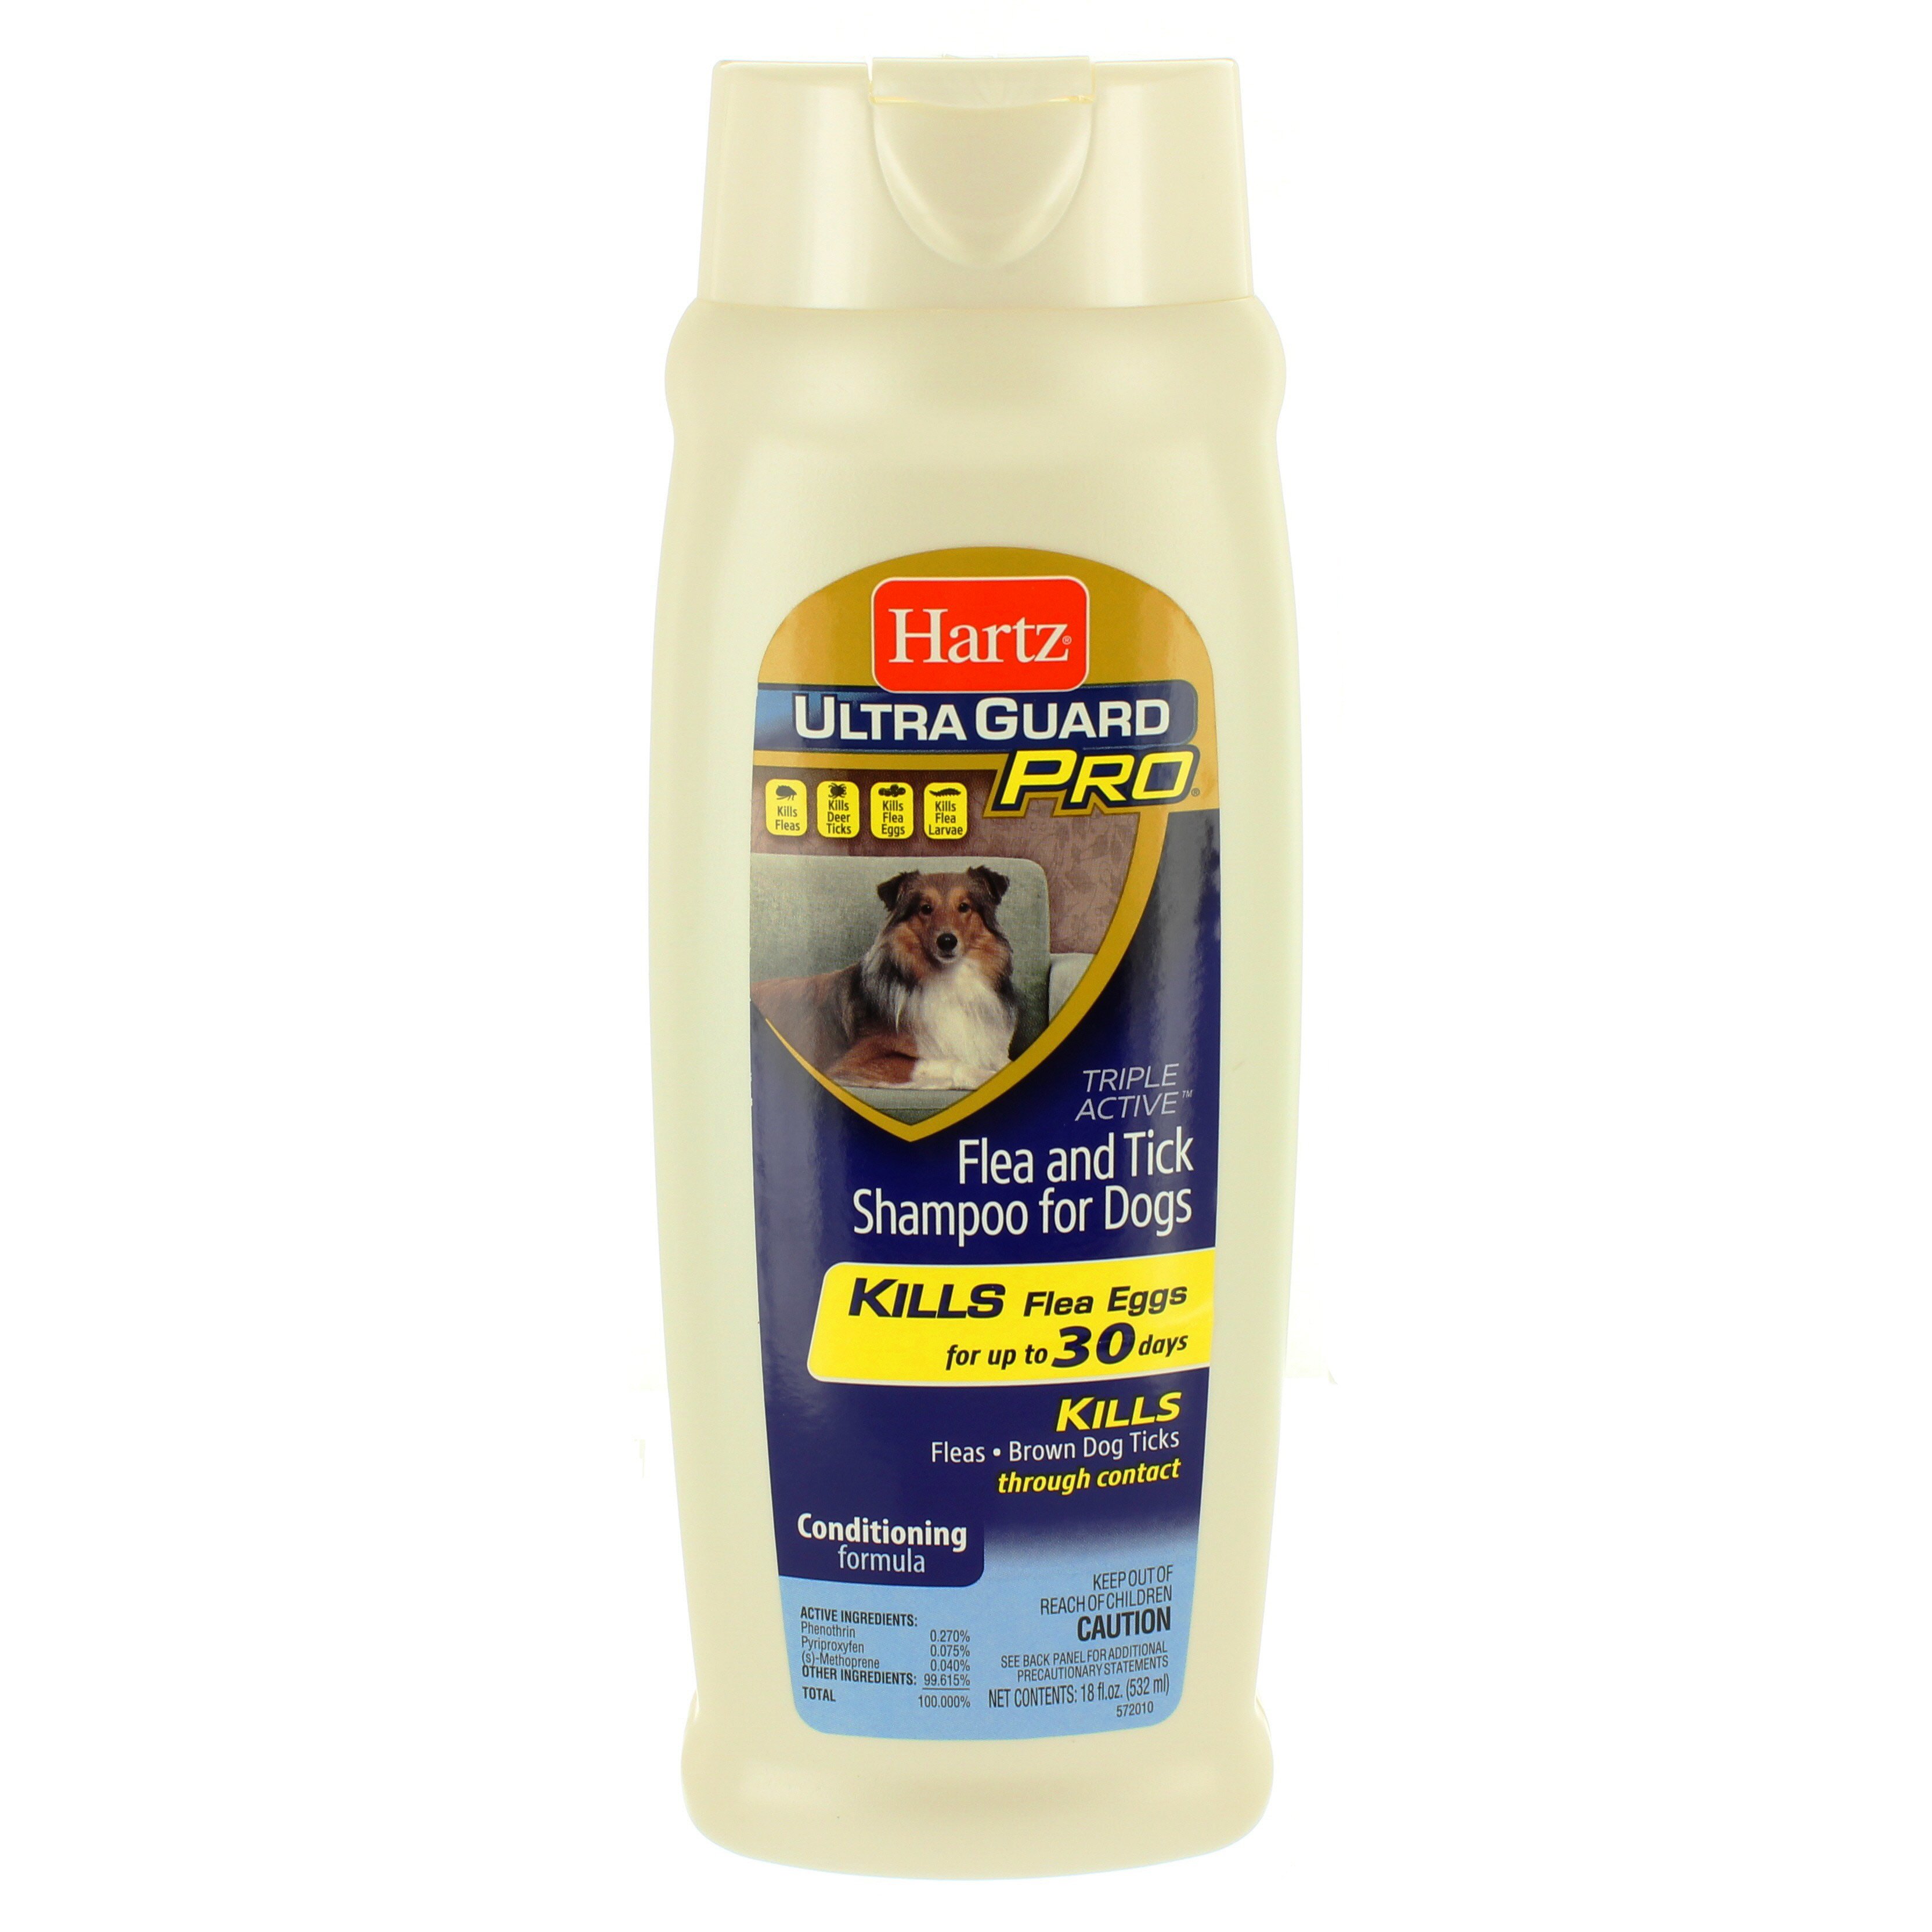 Hartz Ultra Guard Pro Flea & Tick Shampoo for Dogs - Shop Grooming at H-E-B